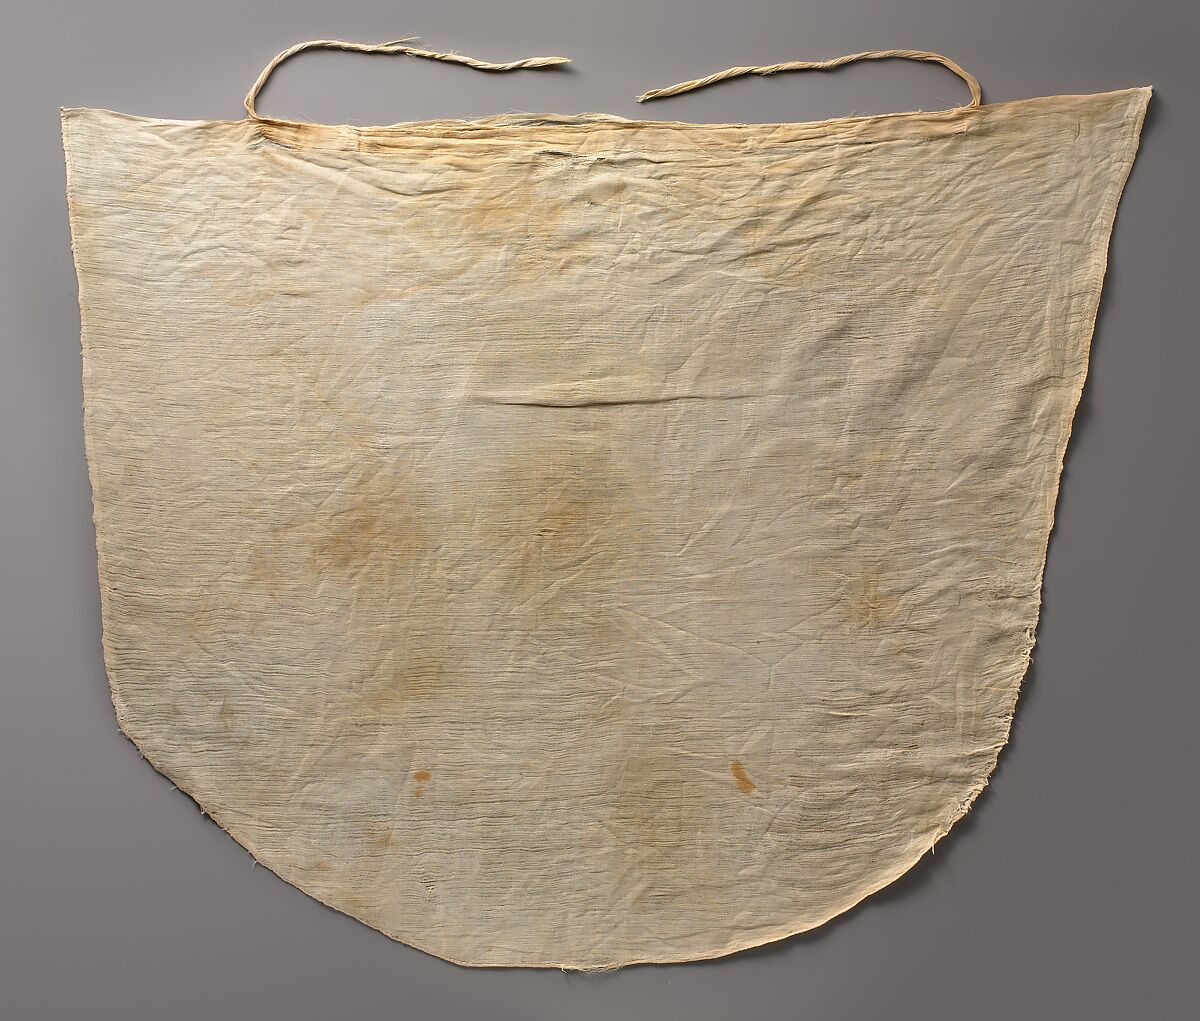 Kerchief from Tutankhamun's Embalming Cache